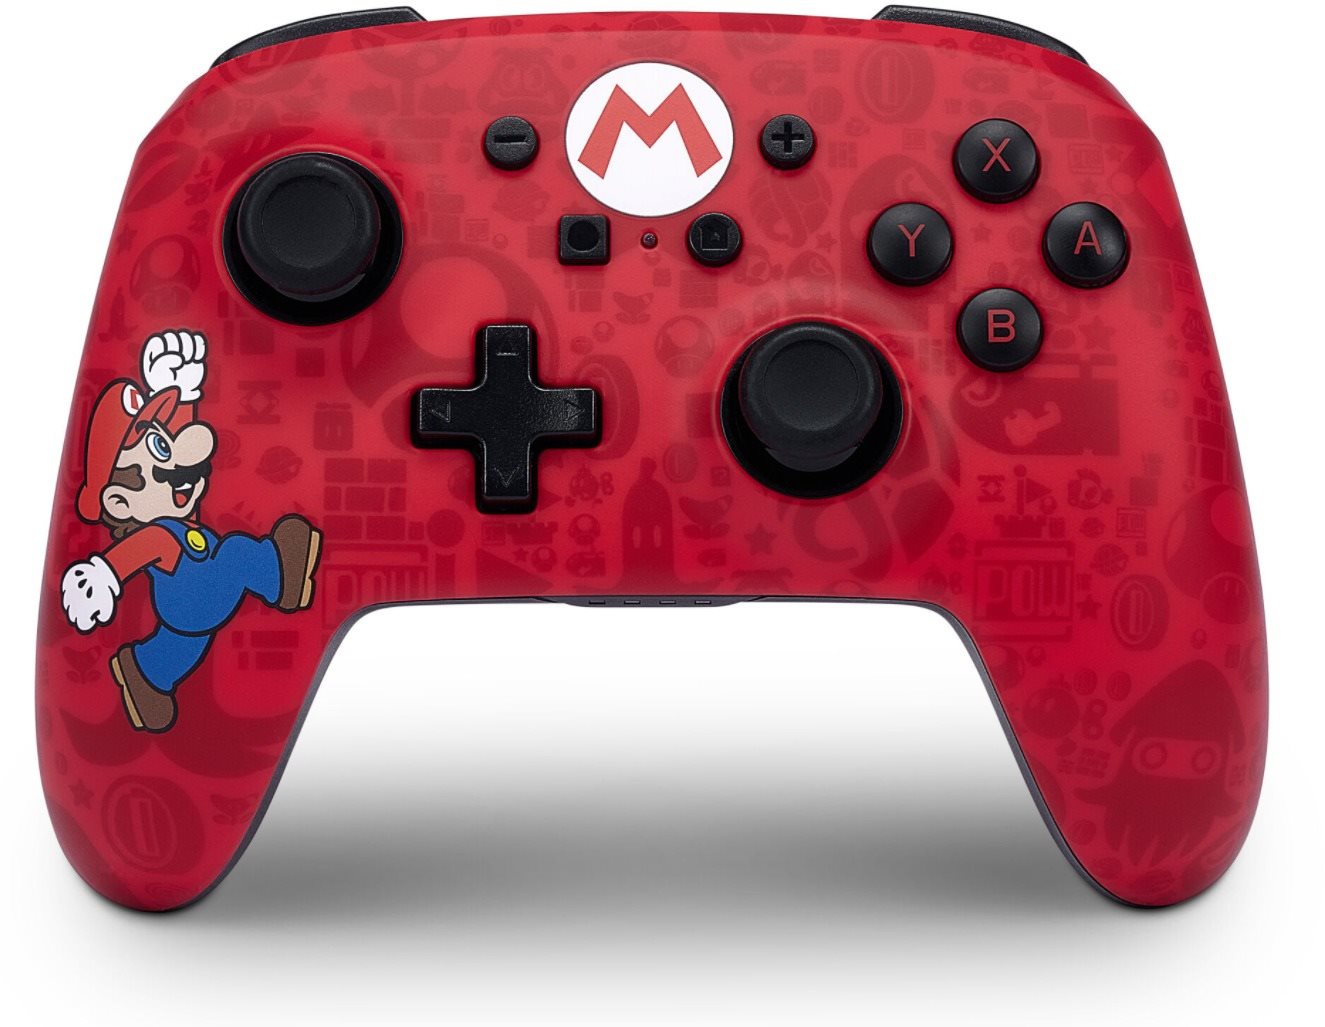 Kontroller PowerA Enhanced Wireless Controller - Here We Go Mario - Nintendo Switch